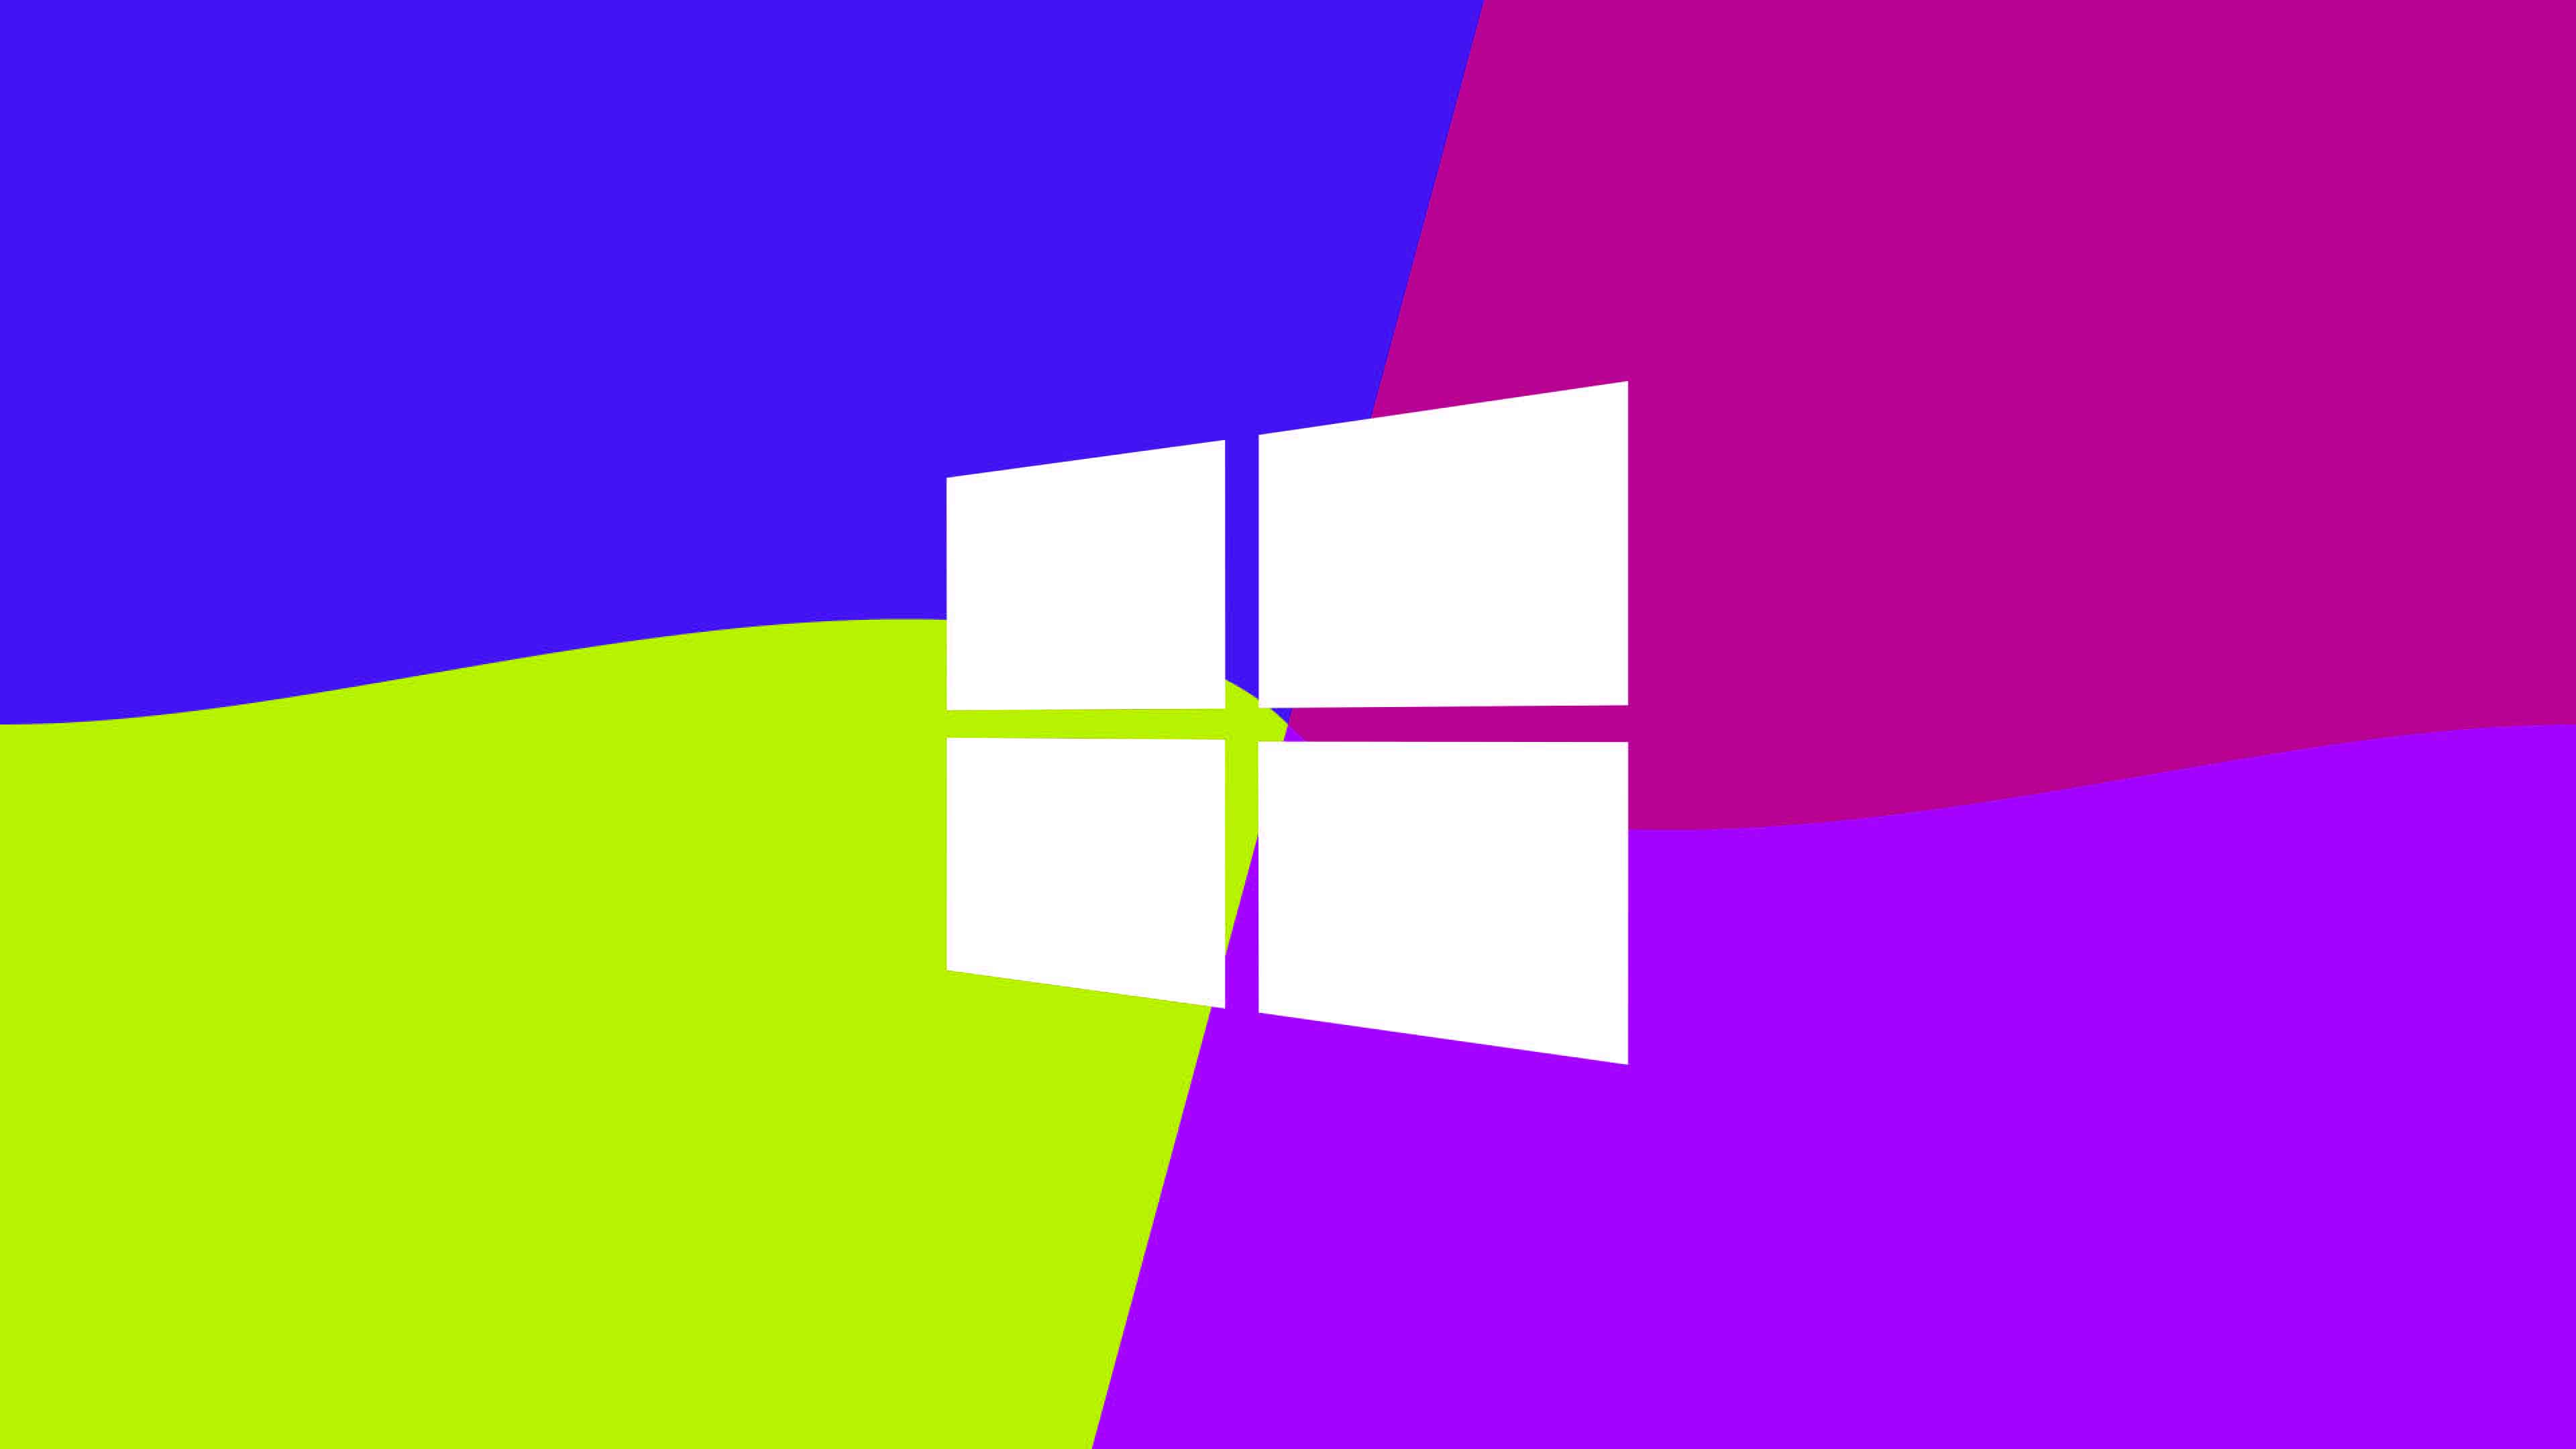 Download Windows 10 wallpaper in 2021